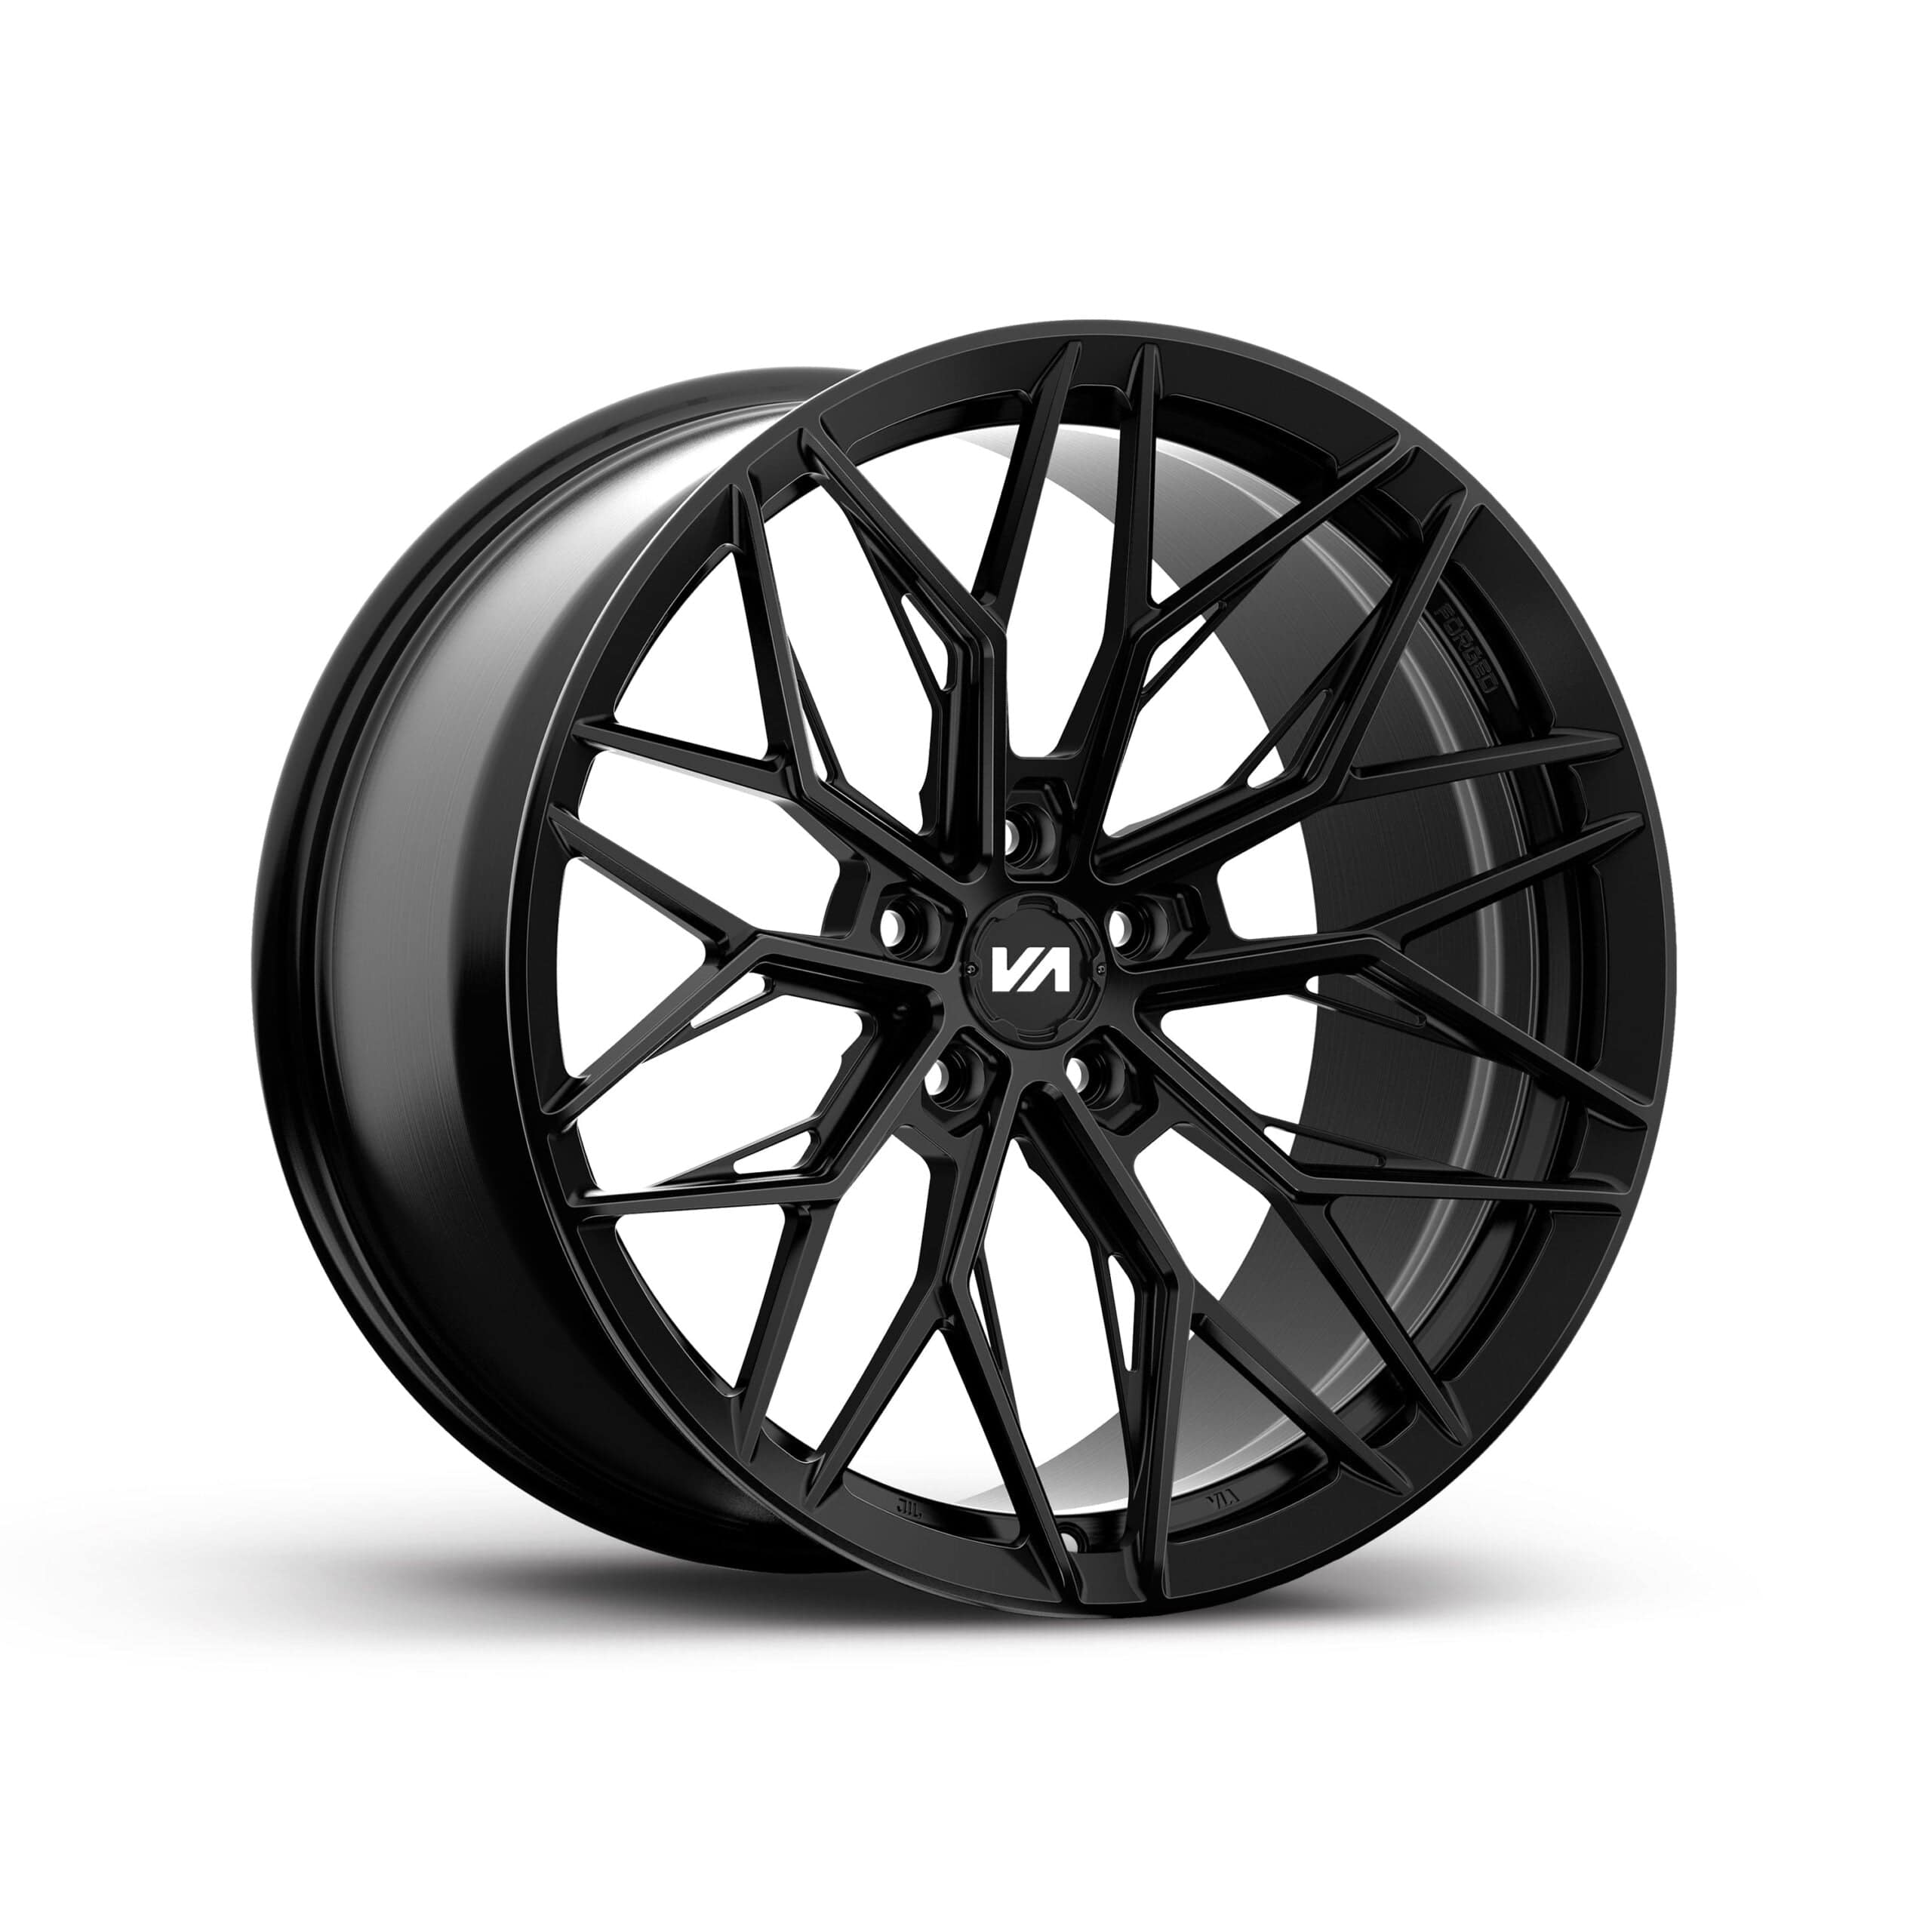 Kies-Motorsports Variant Variant™ Maxim Collection Alloy Wheels 20X12